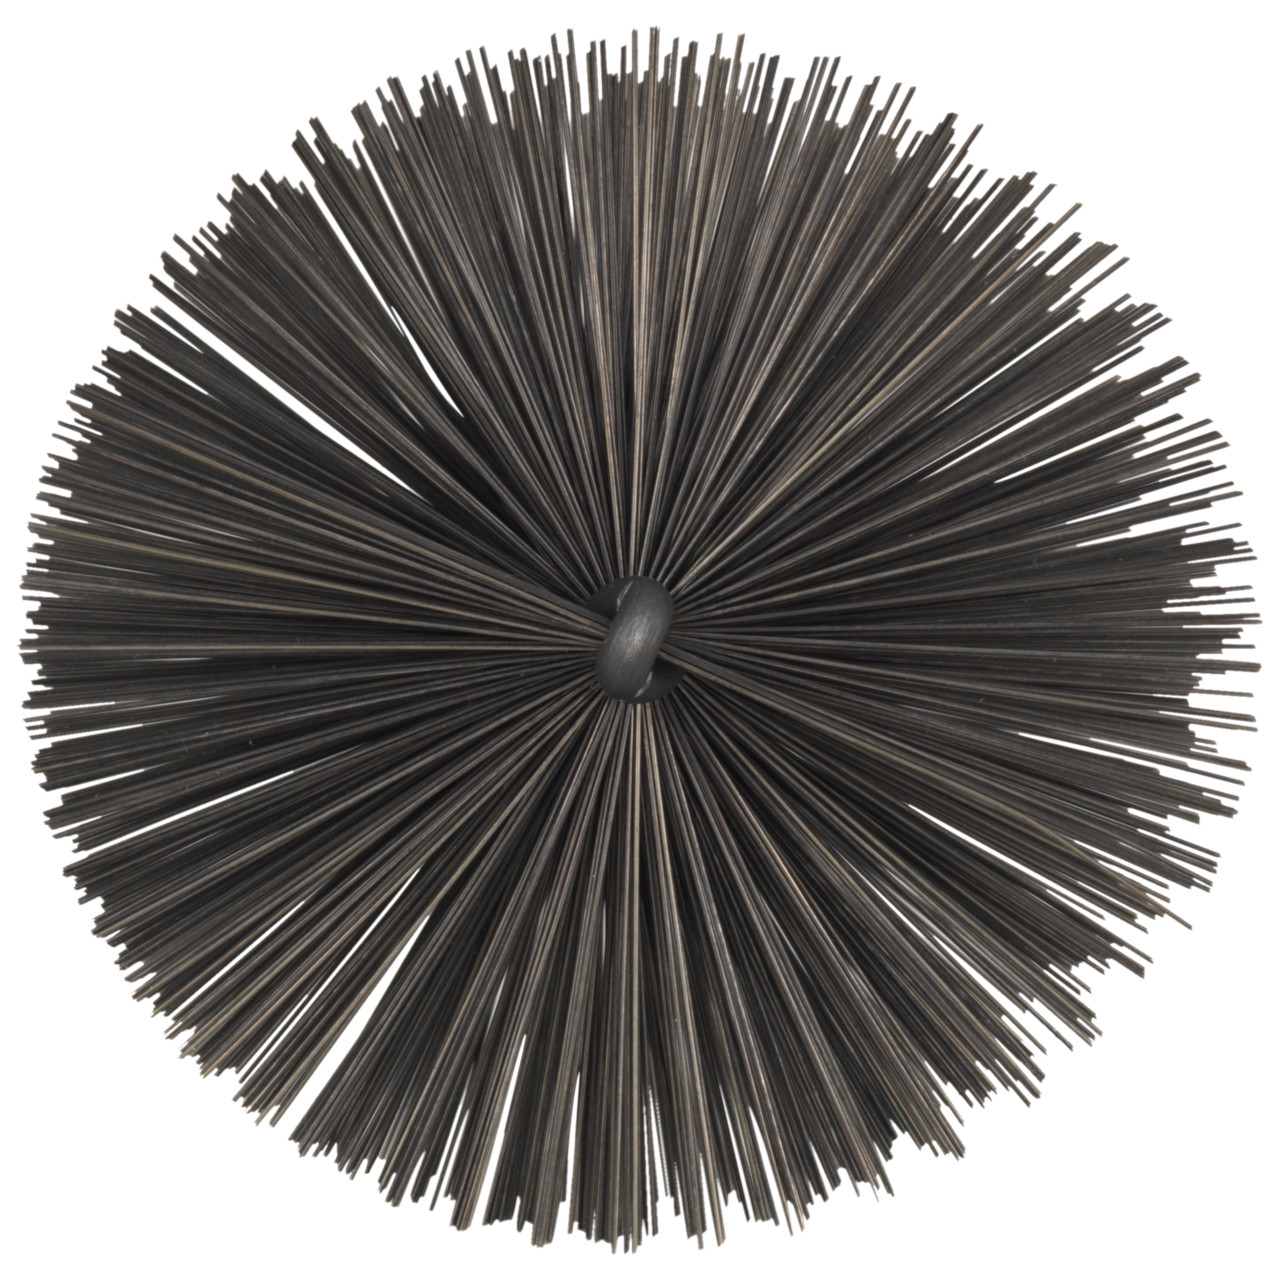 Tyrolit Cepillo para tubos con rosca exterior DxGE-I 50xW1/2-160 Para acero, forma: 18ROGDG - (cepillo para tubos), Art. 34203605